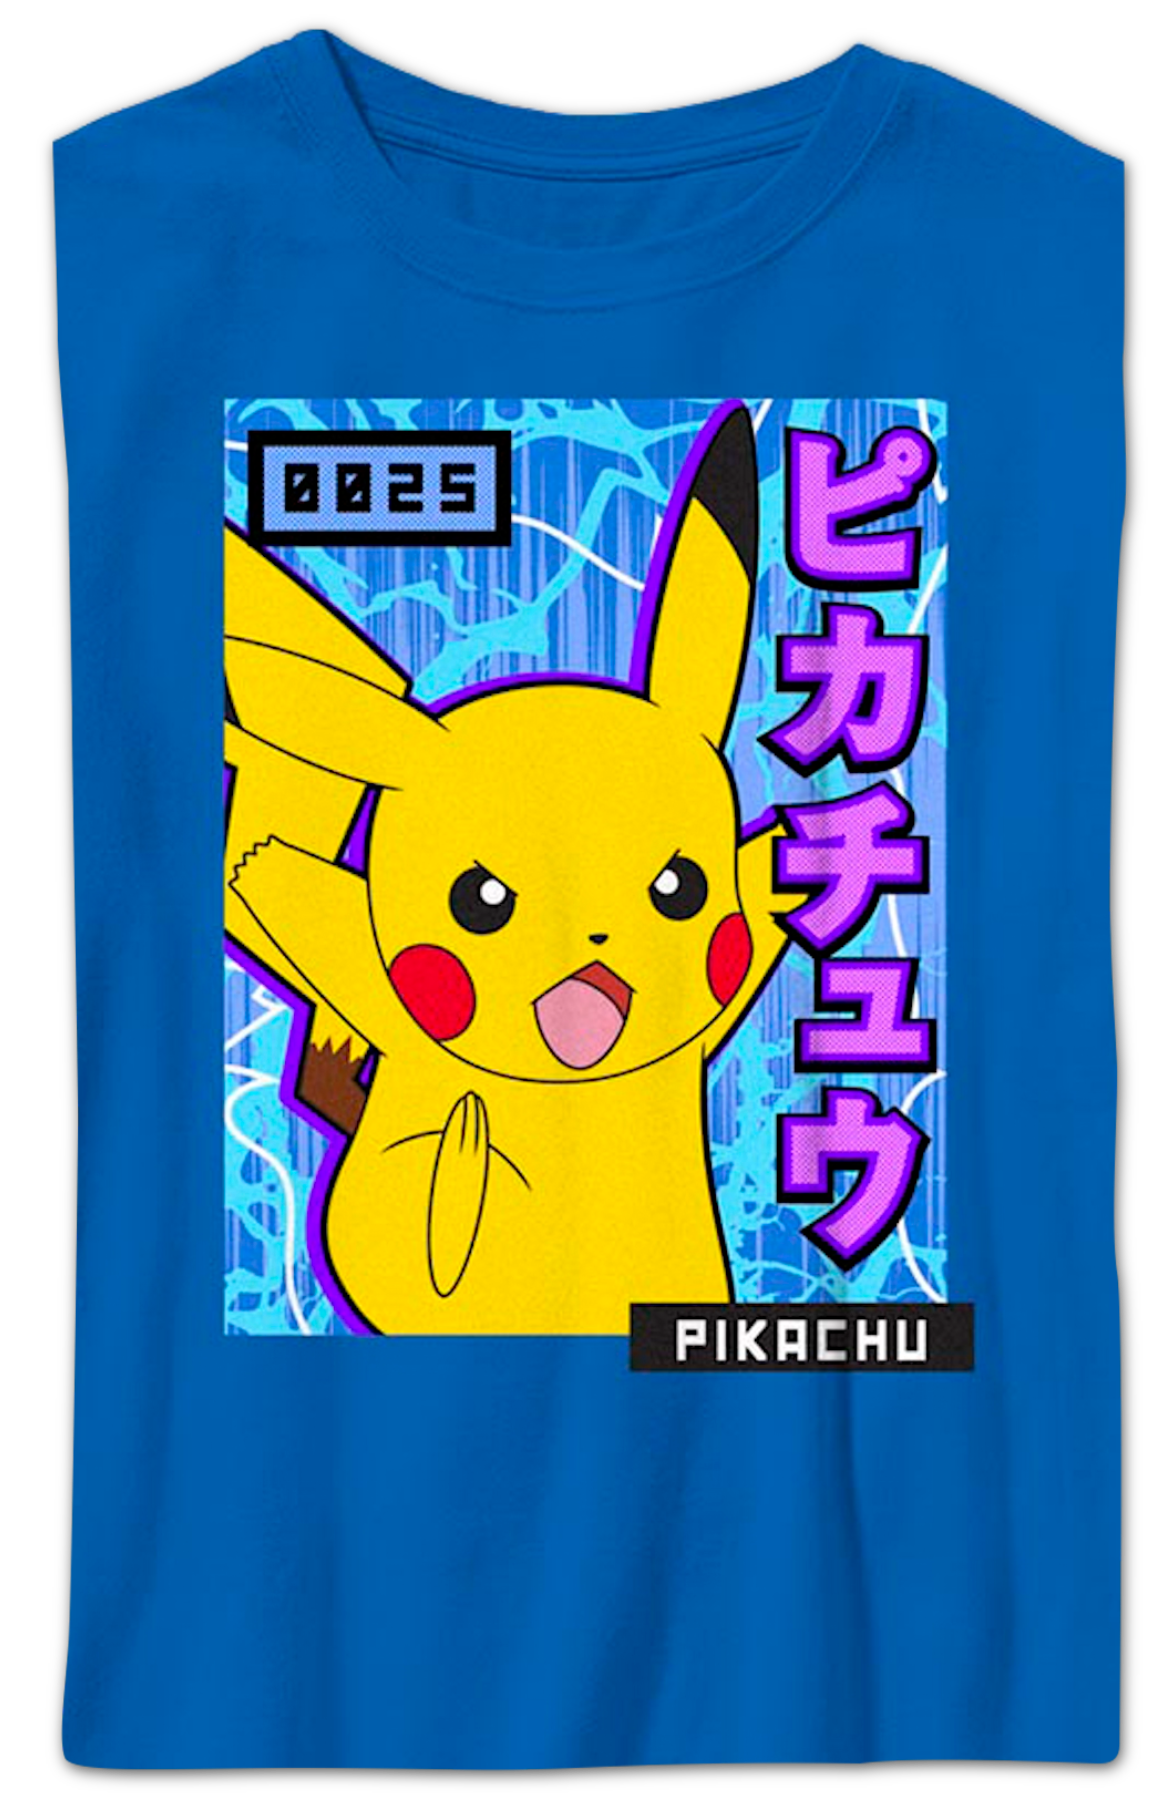 Boys Youth Pikachu Japanese Text Pokemon Shirt